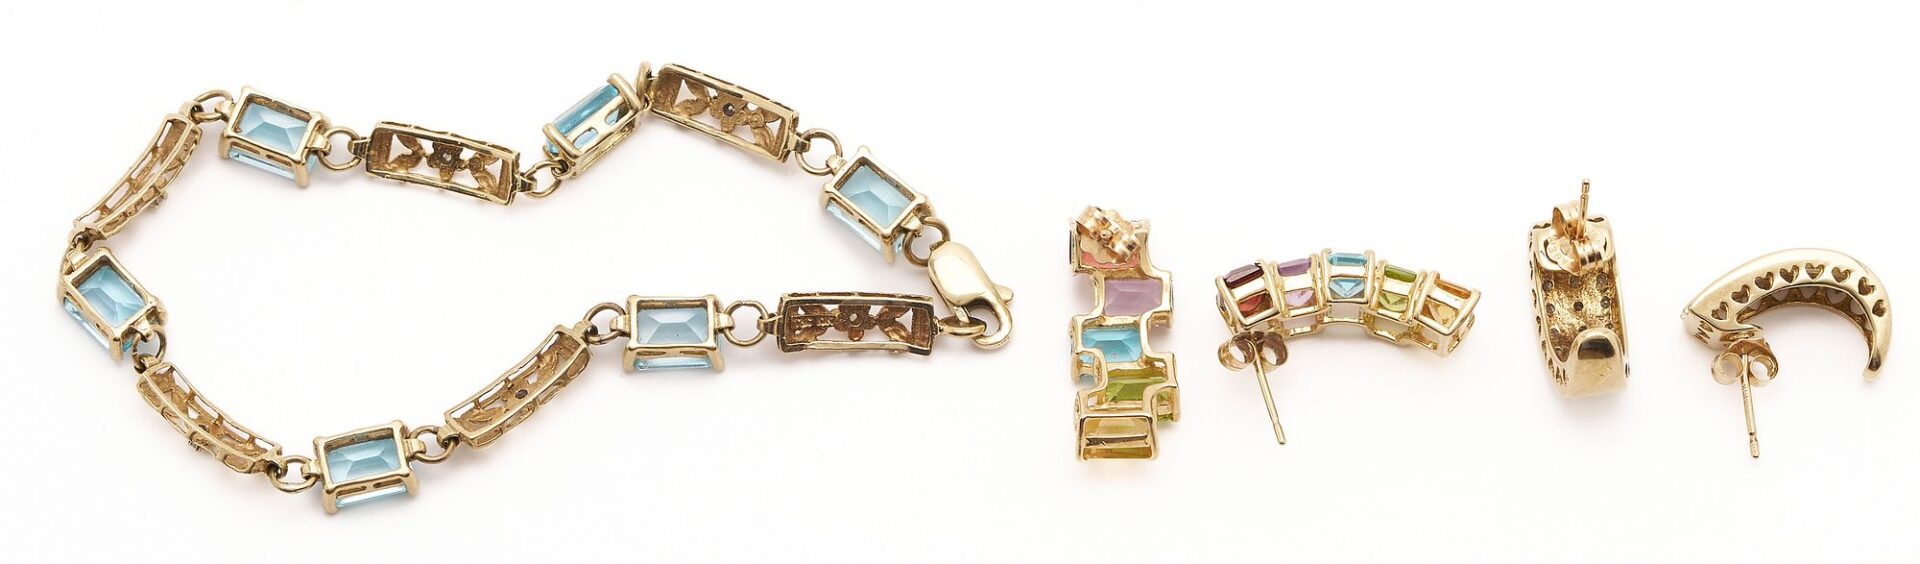 Lot 1039: Gold & Gemstone Jewelry